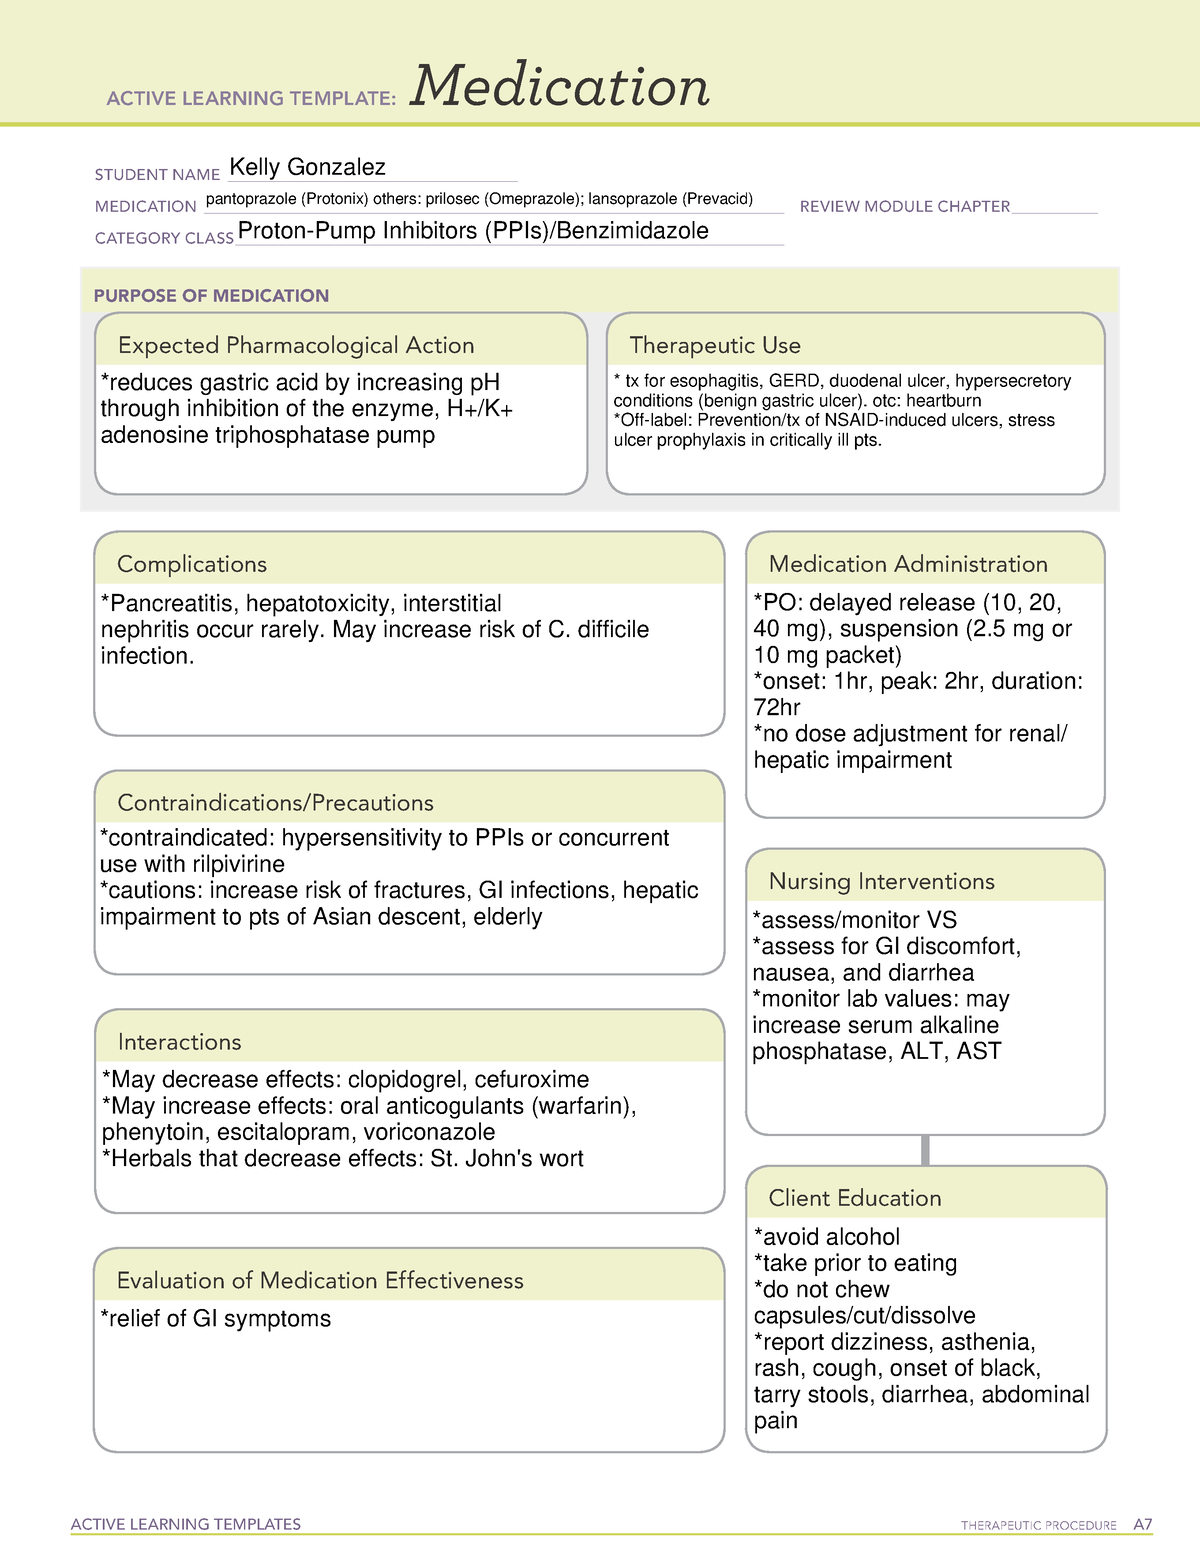 ati-medication-pantoprazole-protonix-active-learning-templates-therapeutic-procedure-a